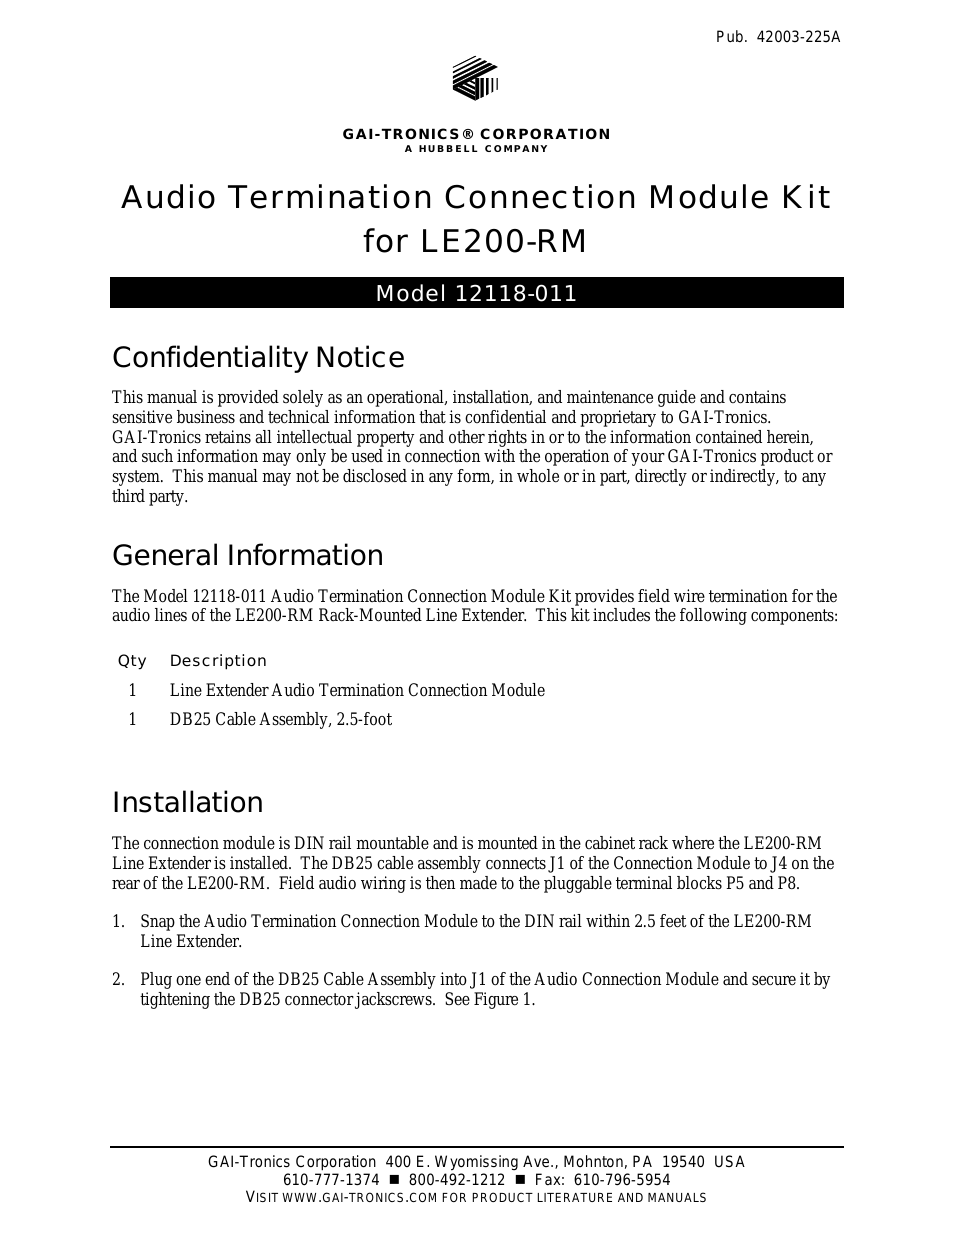 12118-011 Audio Termination Connectin Module Kit for LE200RM